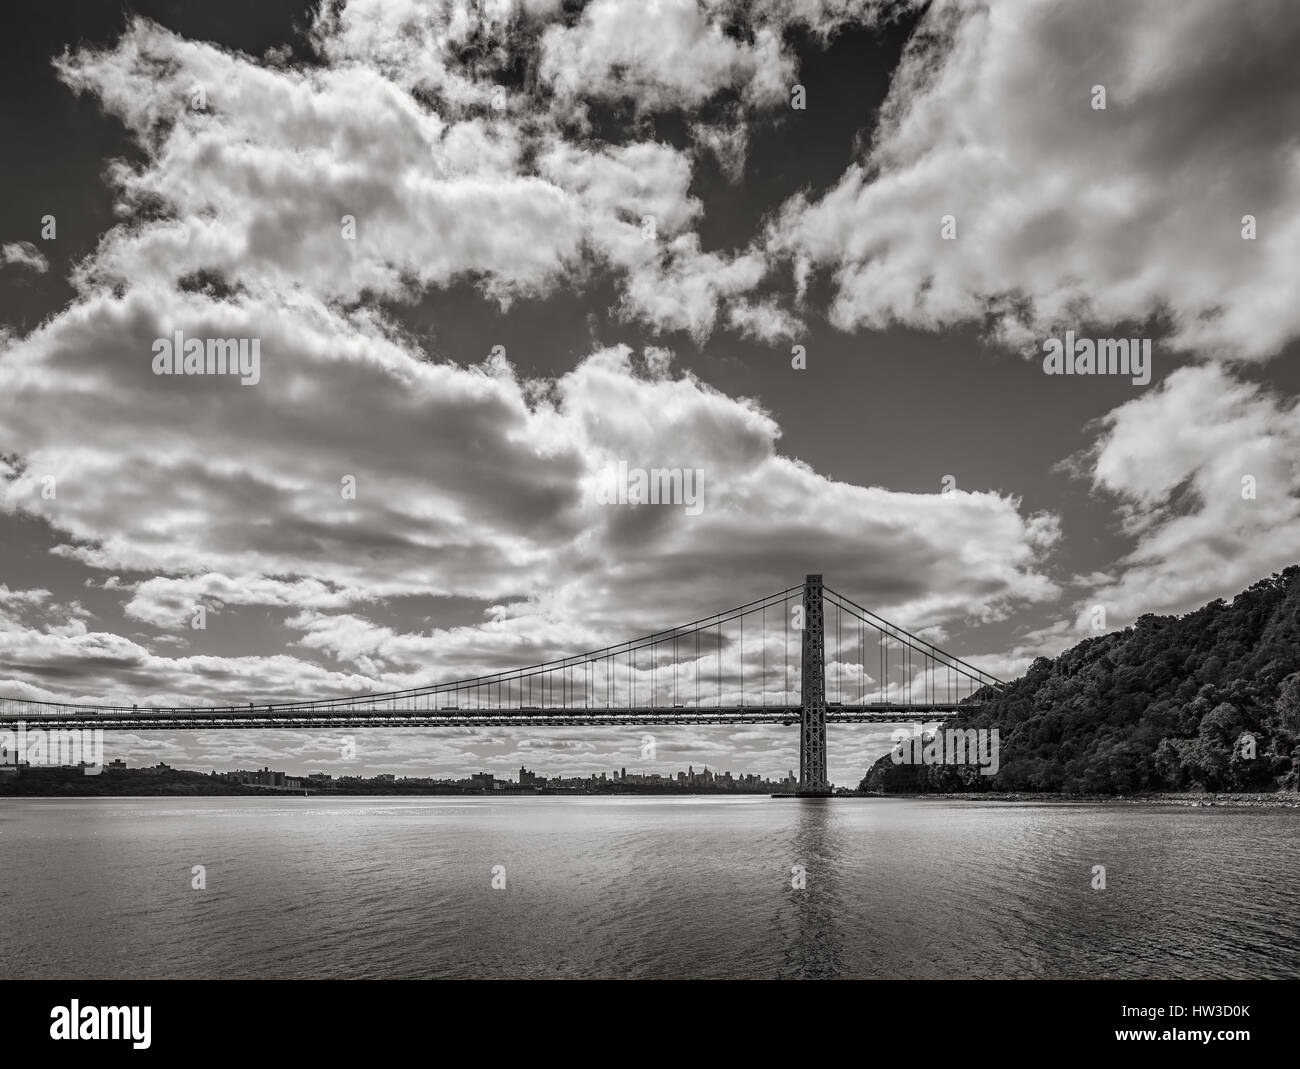 George Washington Bridge spanning Hudson River with clouds in Black & White. New York City Stock Photo